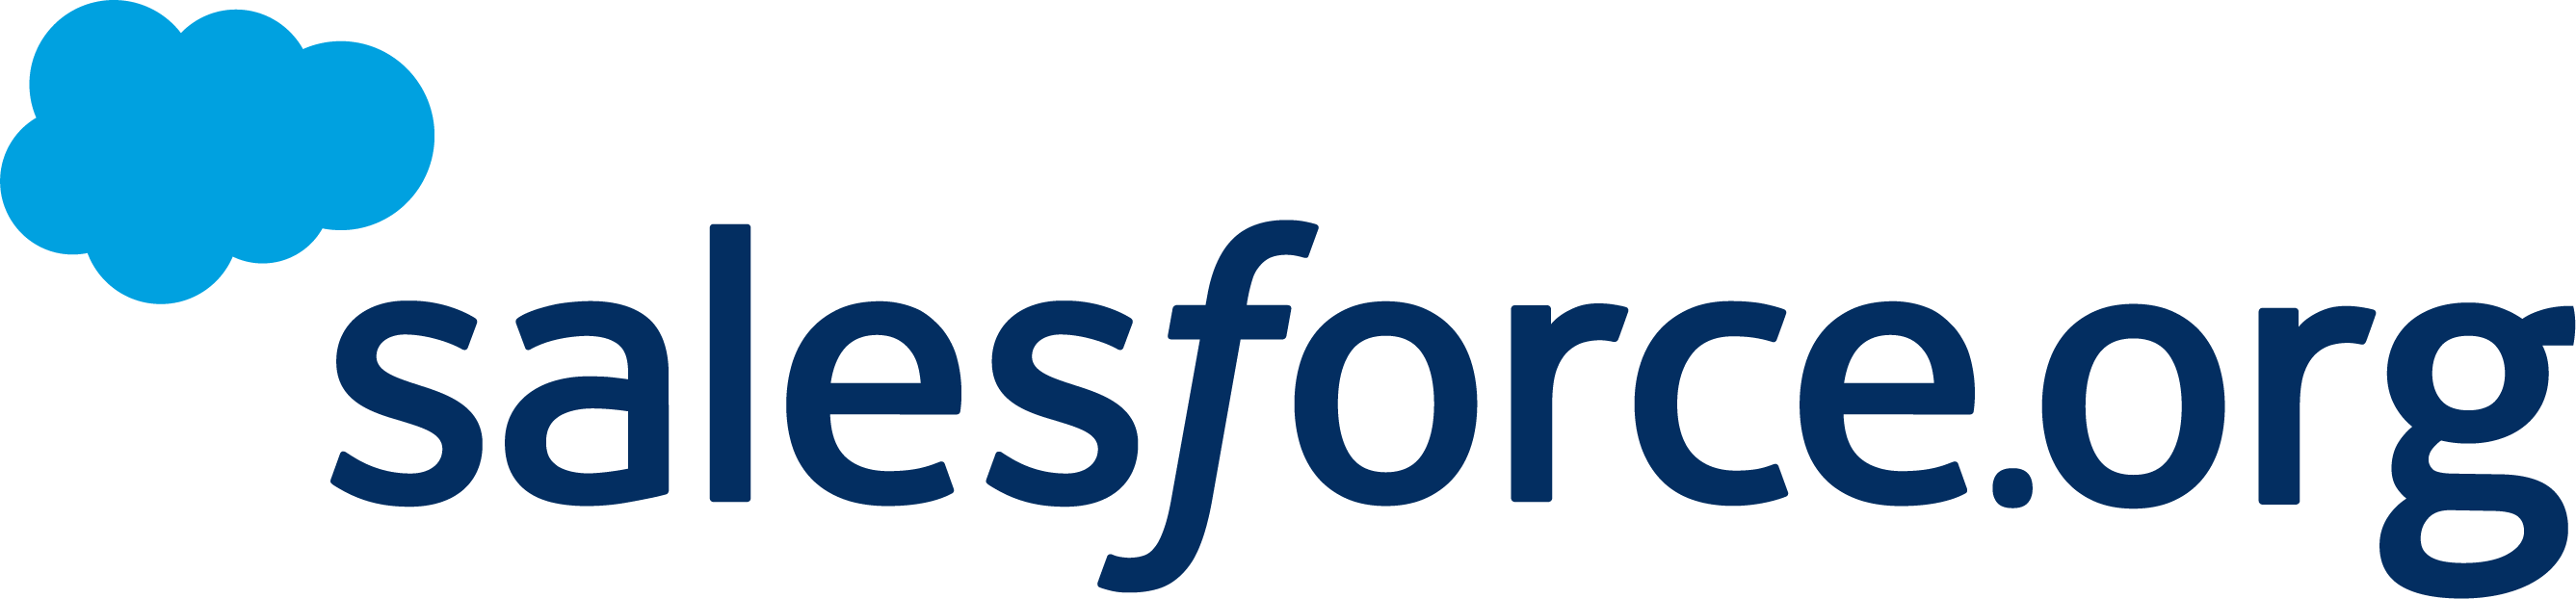 Salesforce-Logo-2020